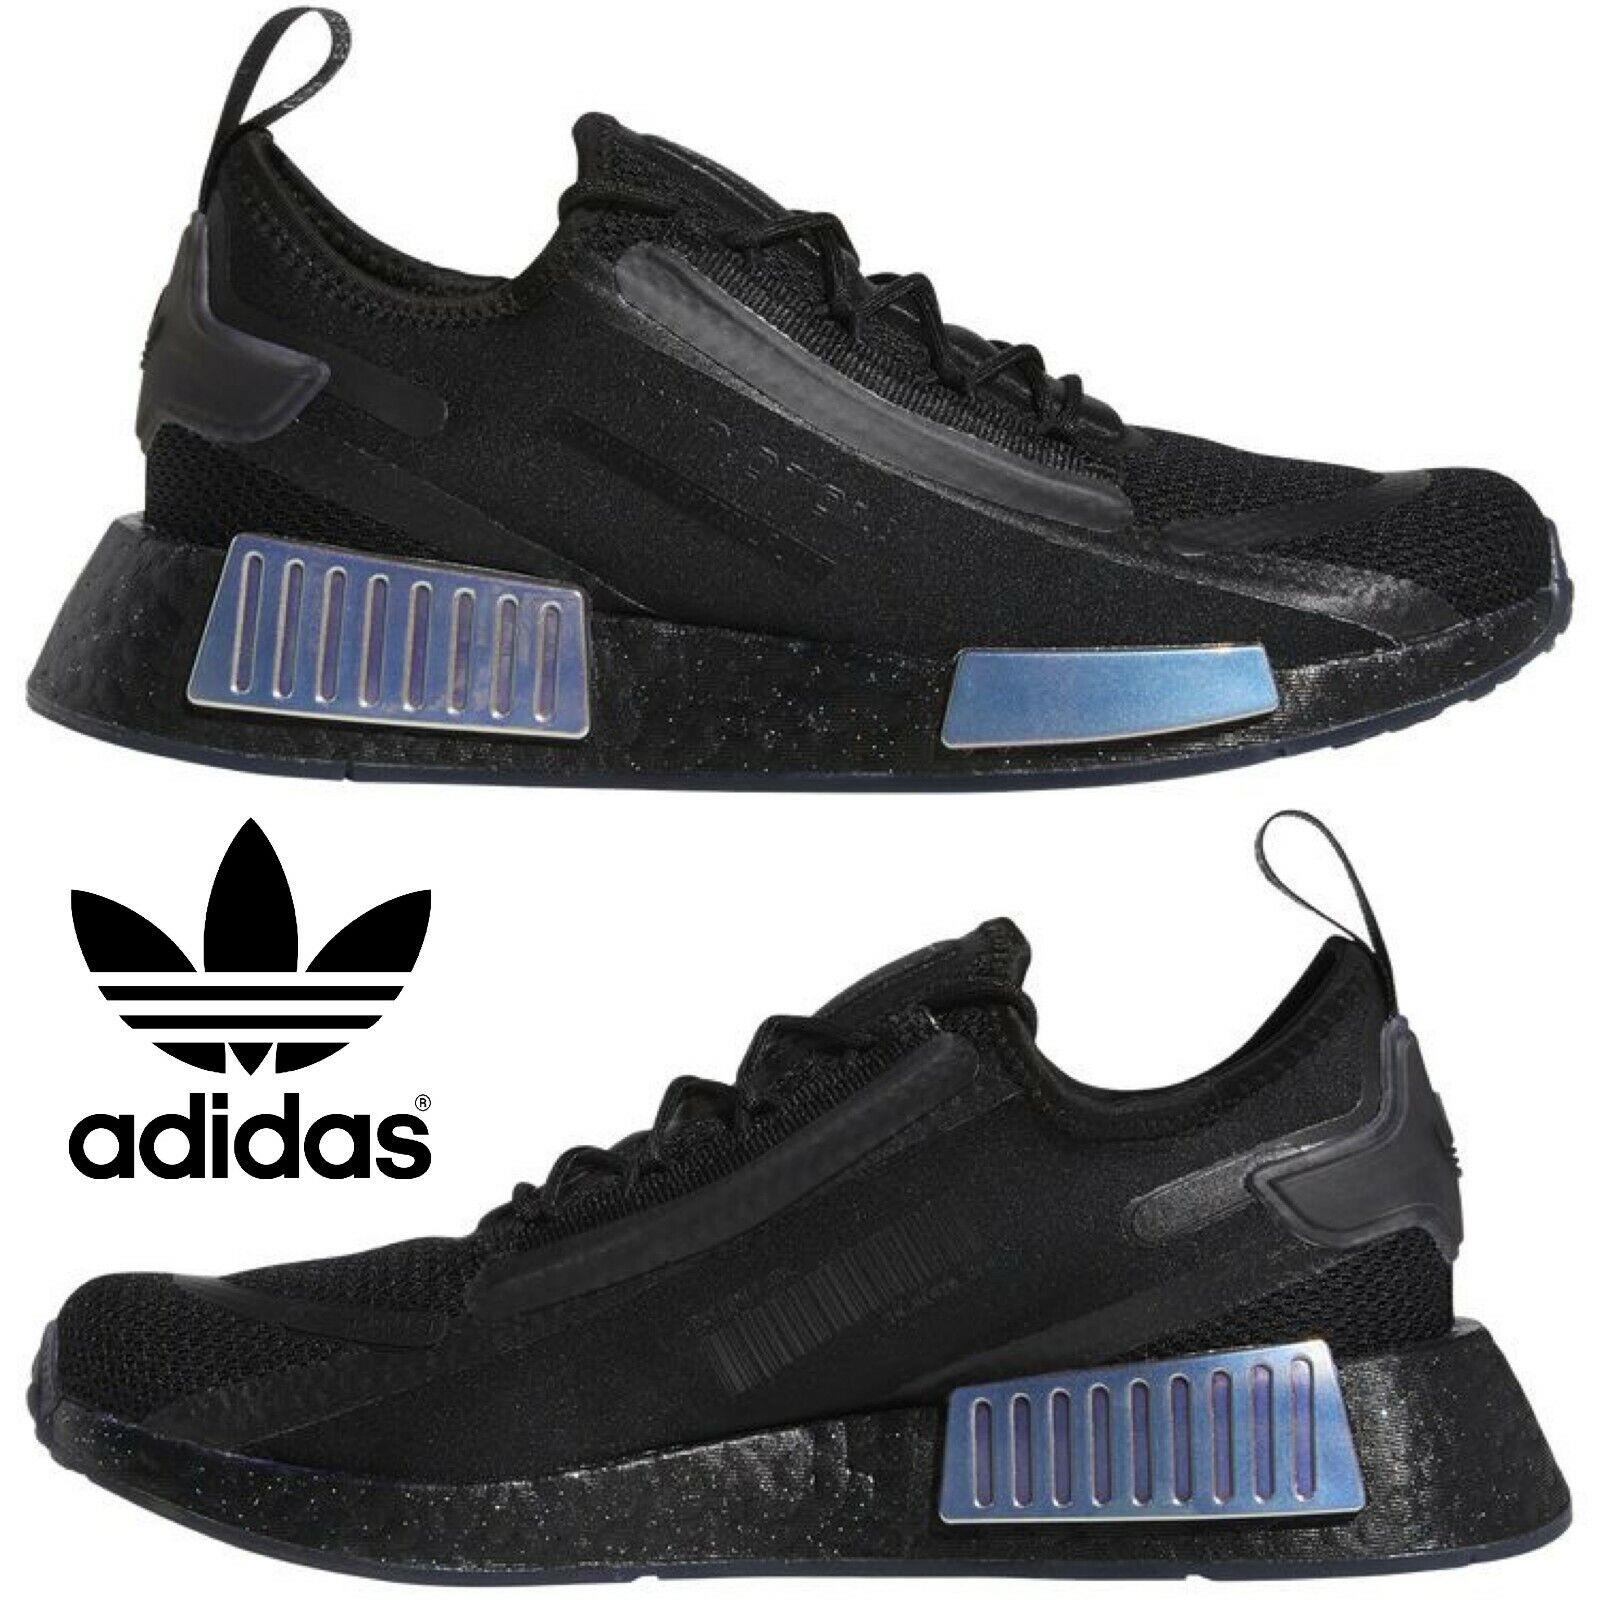 Adidas Originals Nmd R1 Casual Shoes Women s Sneakers Sport Gym Running Black - Black , Black/Black/Black Manufacturer